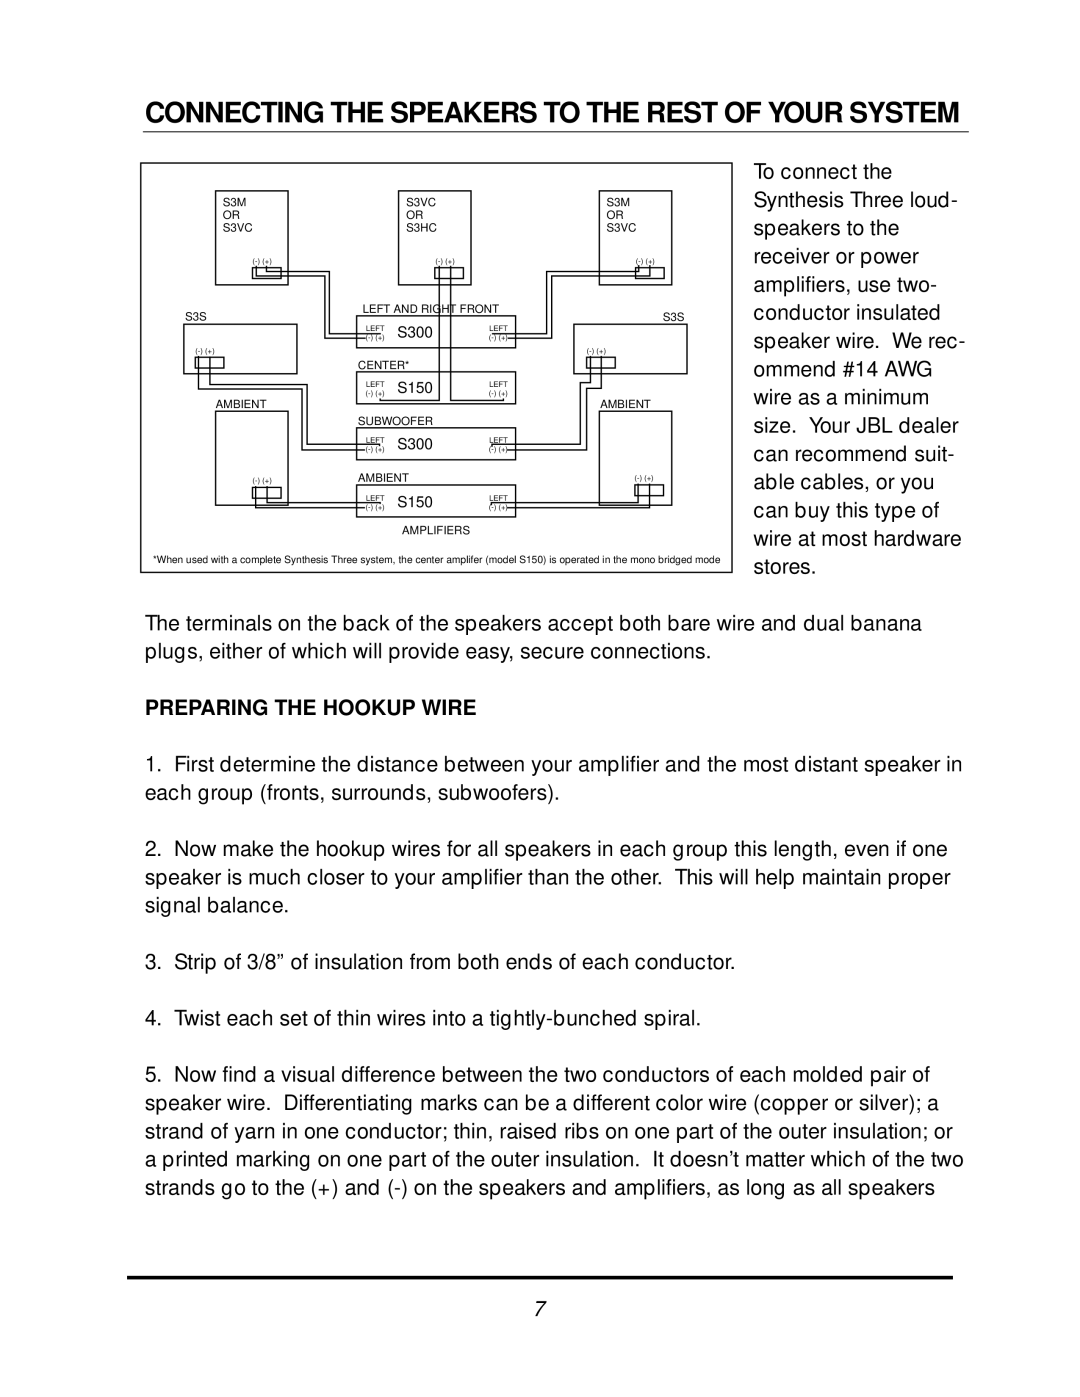 JBL SYN 3 manual Preparing The Hookup Wire 